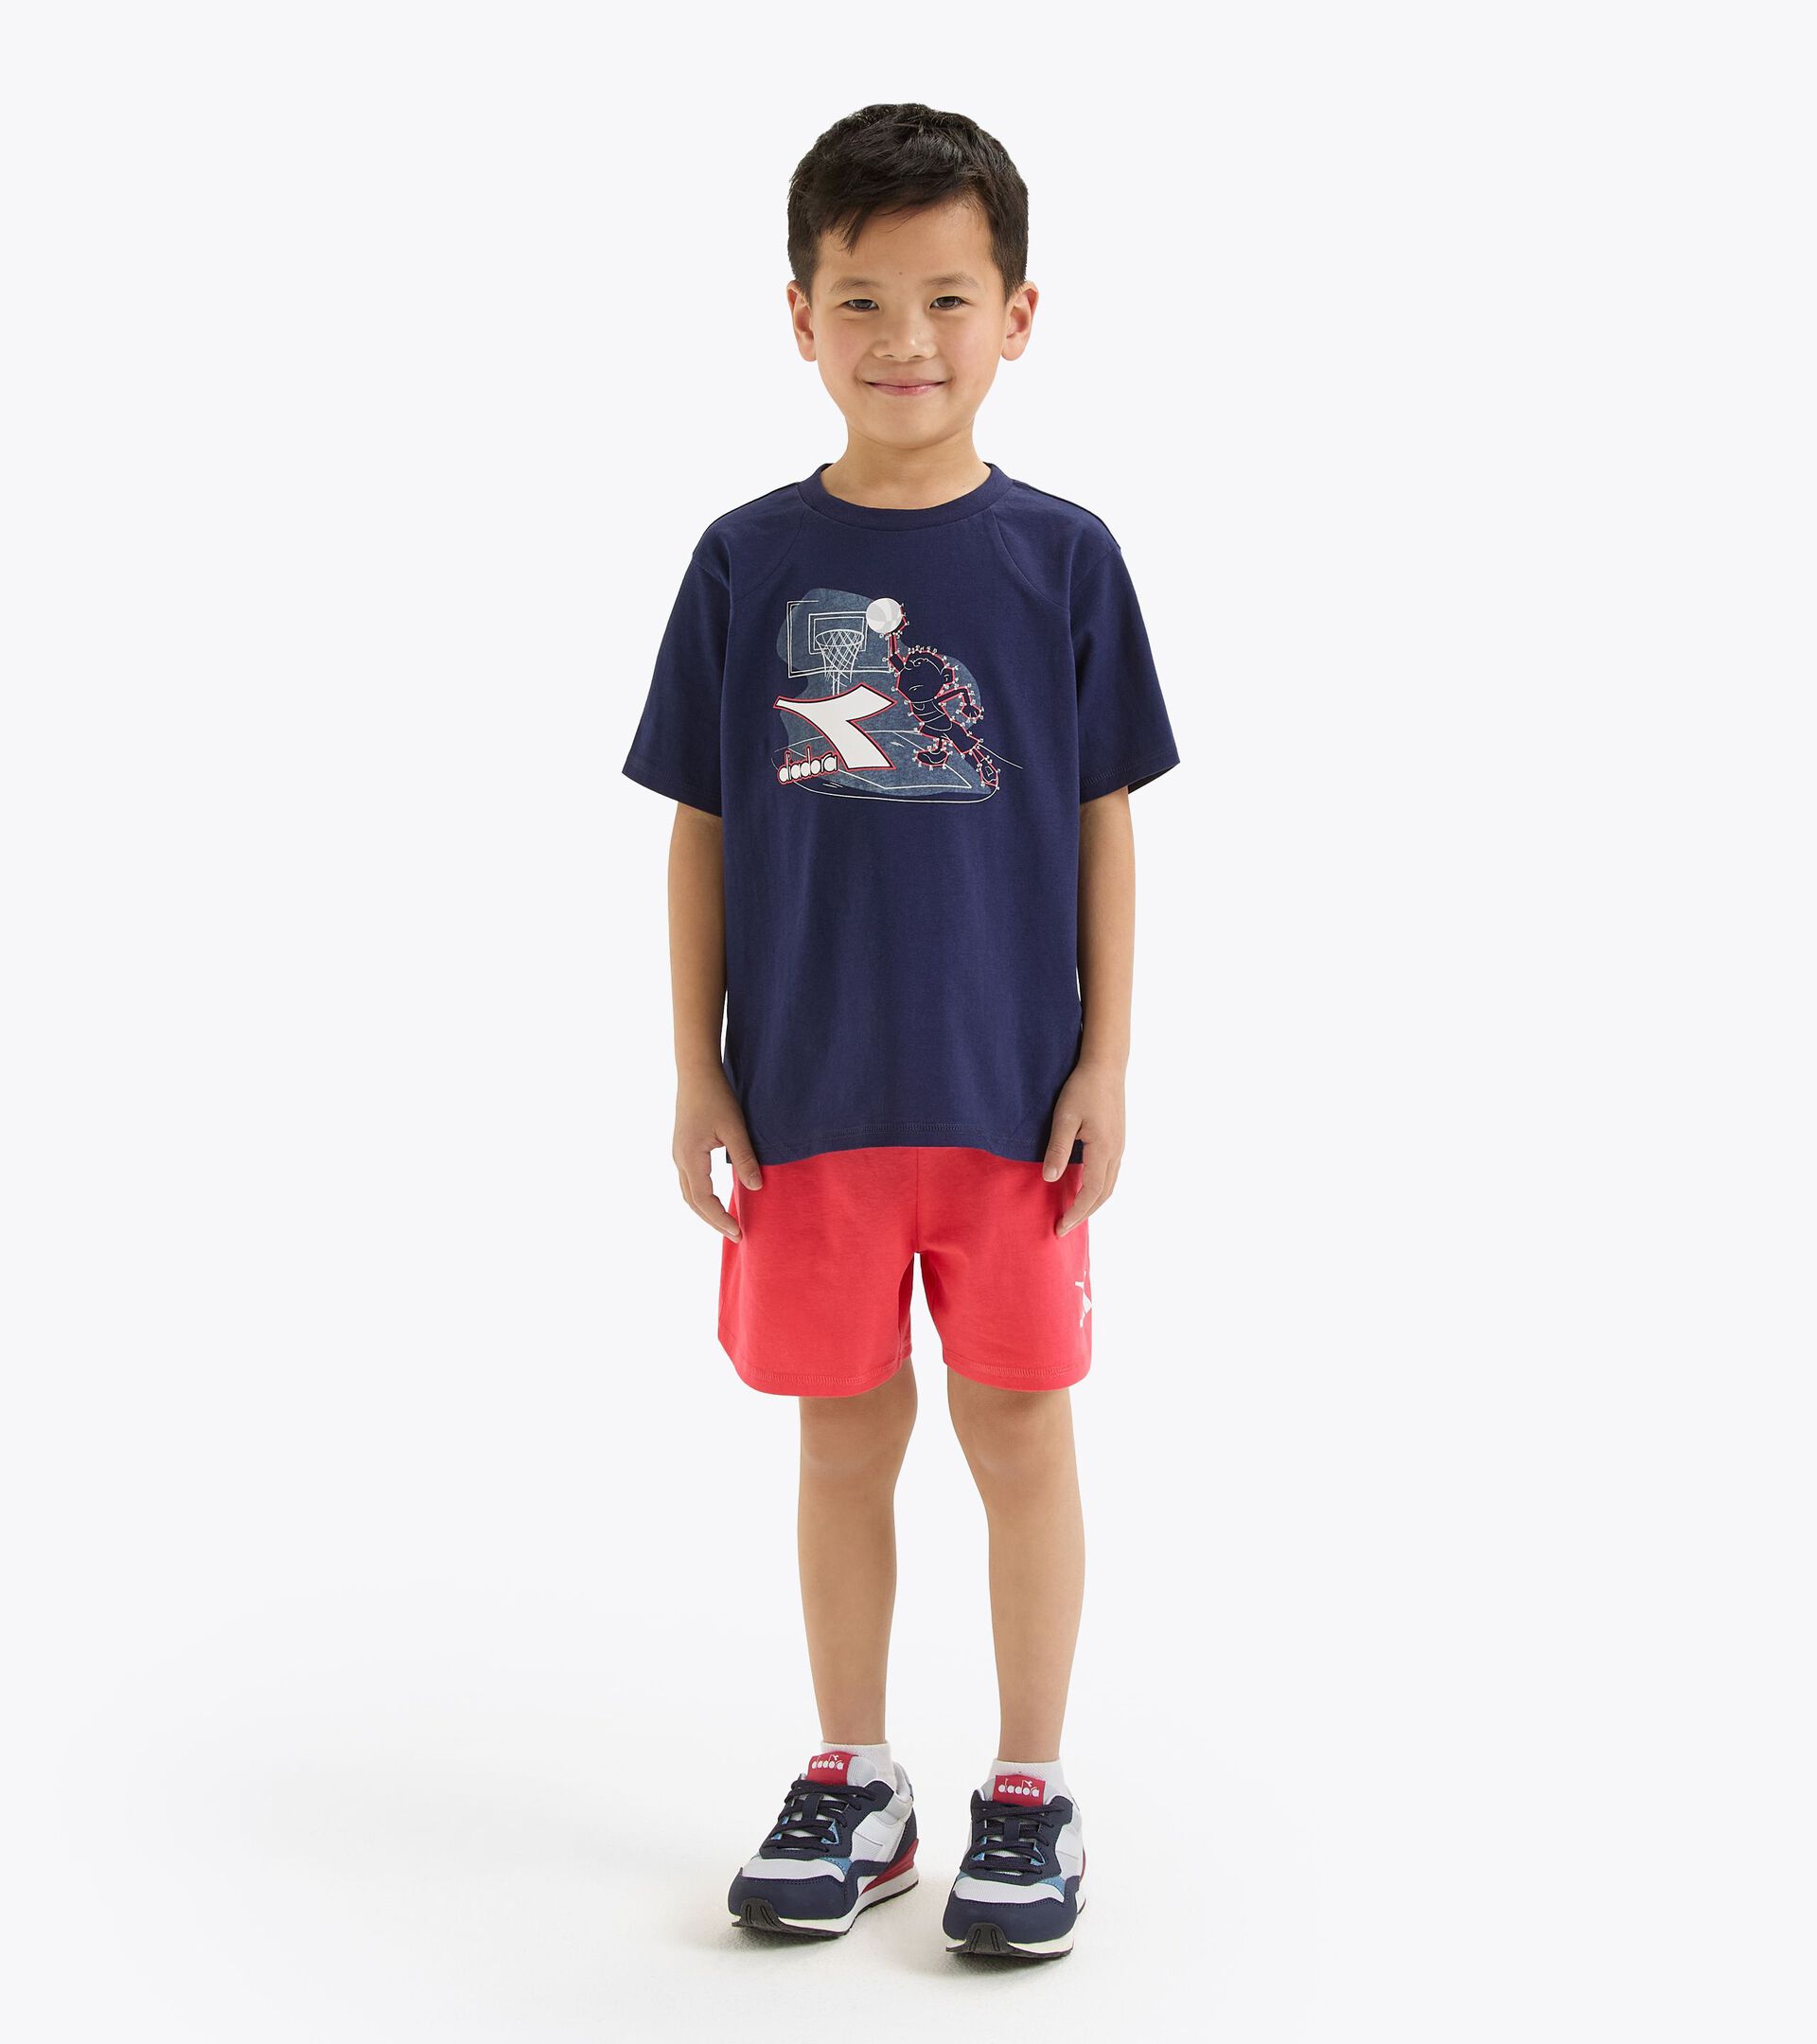 Sports set - T-shirt and shorts - Boy
 JB. SET SS RIDDLE CLASSIC NAVY - Diadora